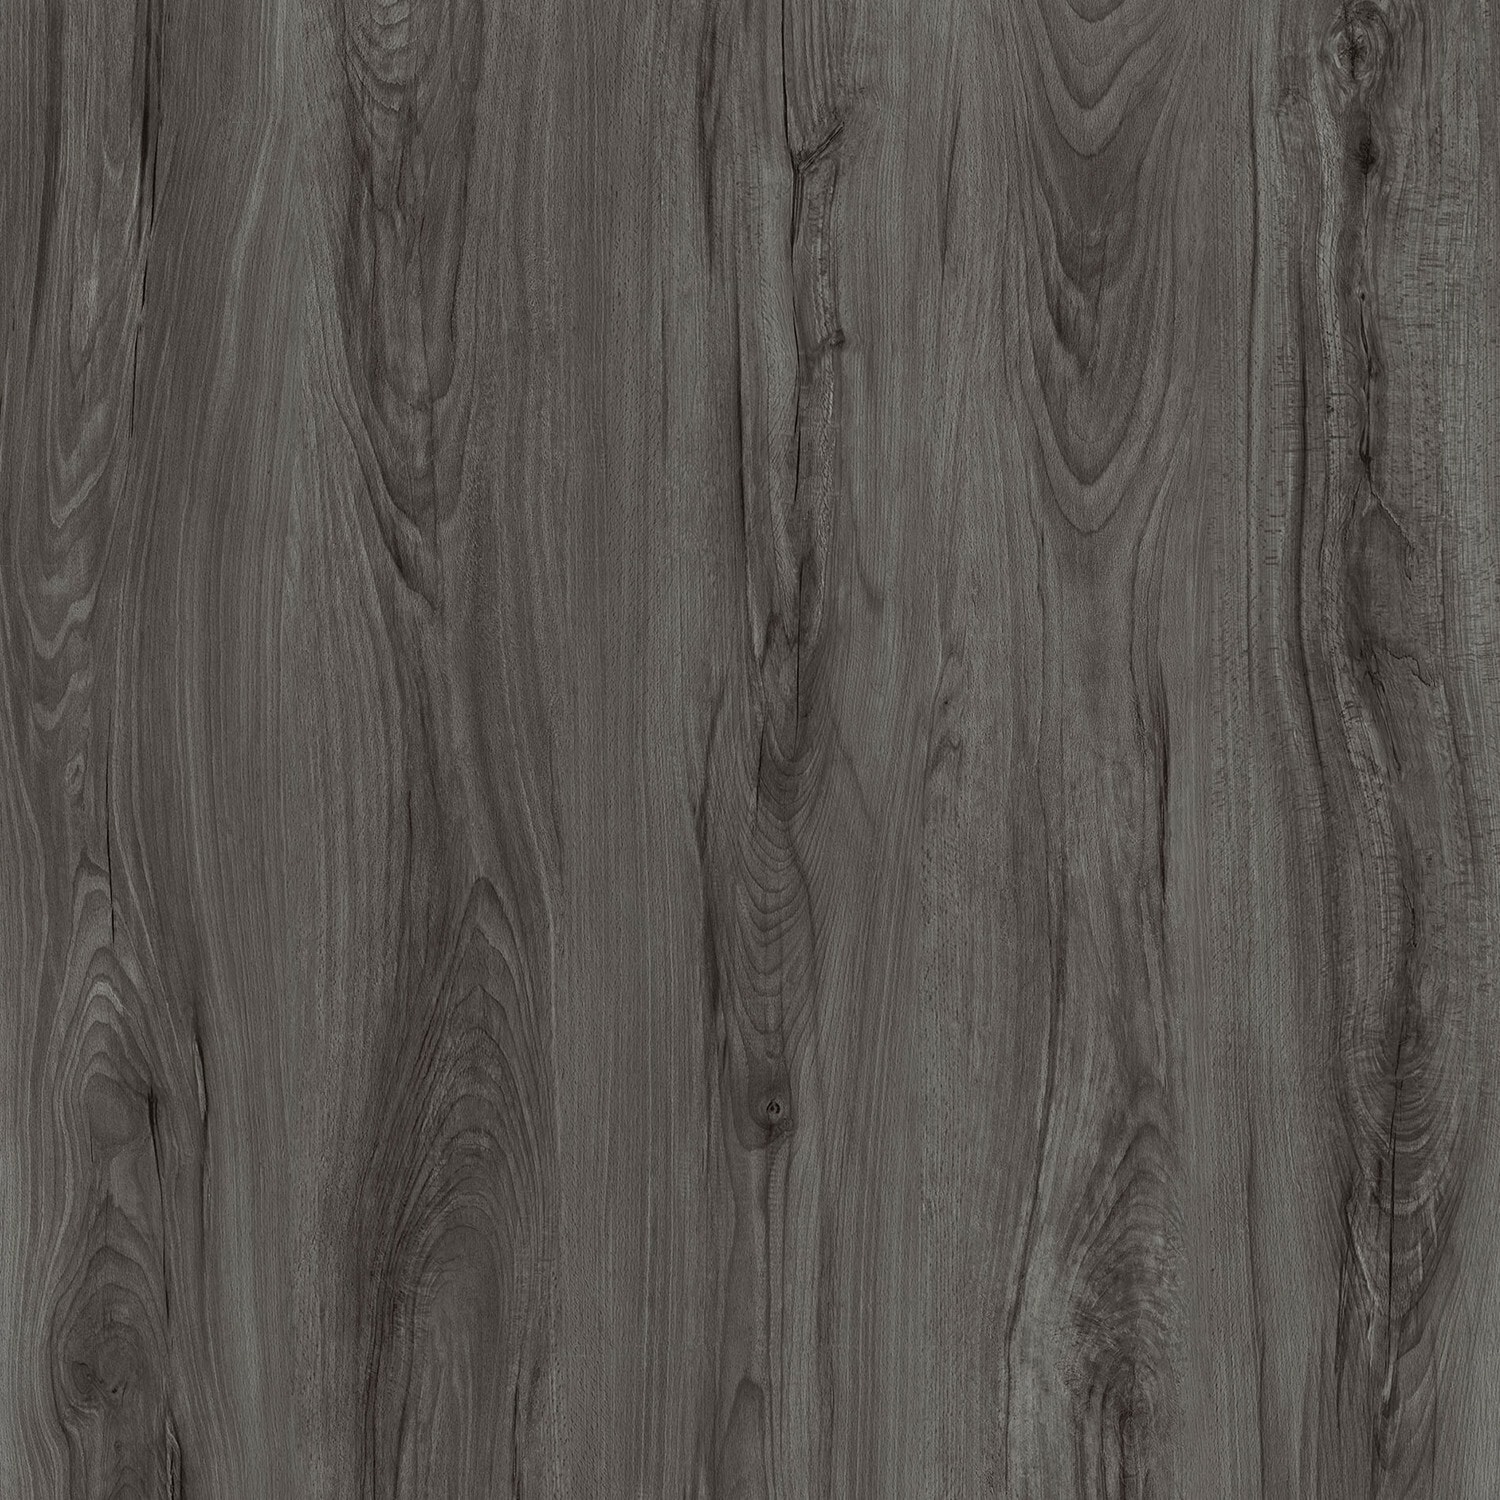 Carbonado 530 824 Luxury Vinyl Planks - Cabin Multi-Strip [530 824] - $2.33  : Flooring Tools & Installation Supplies